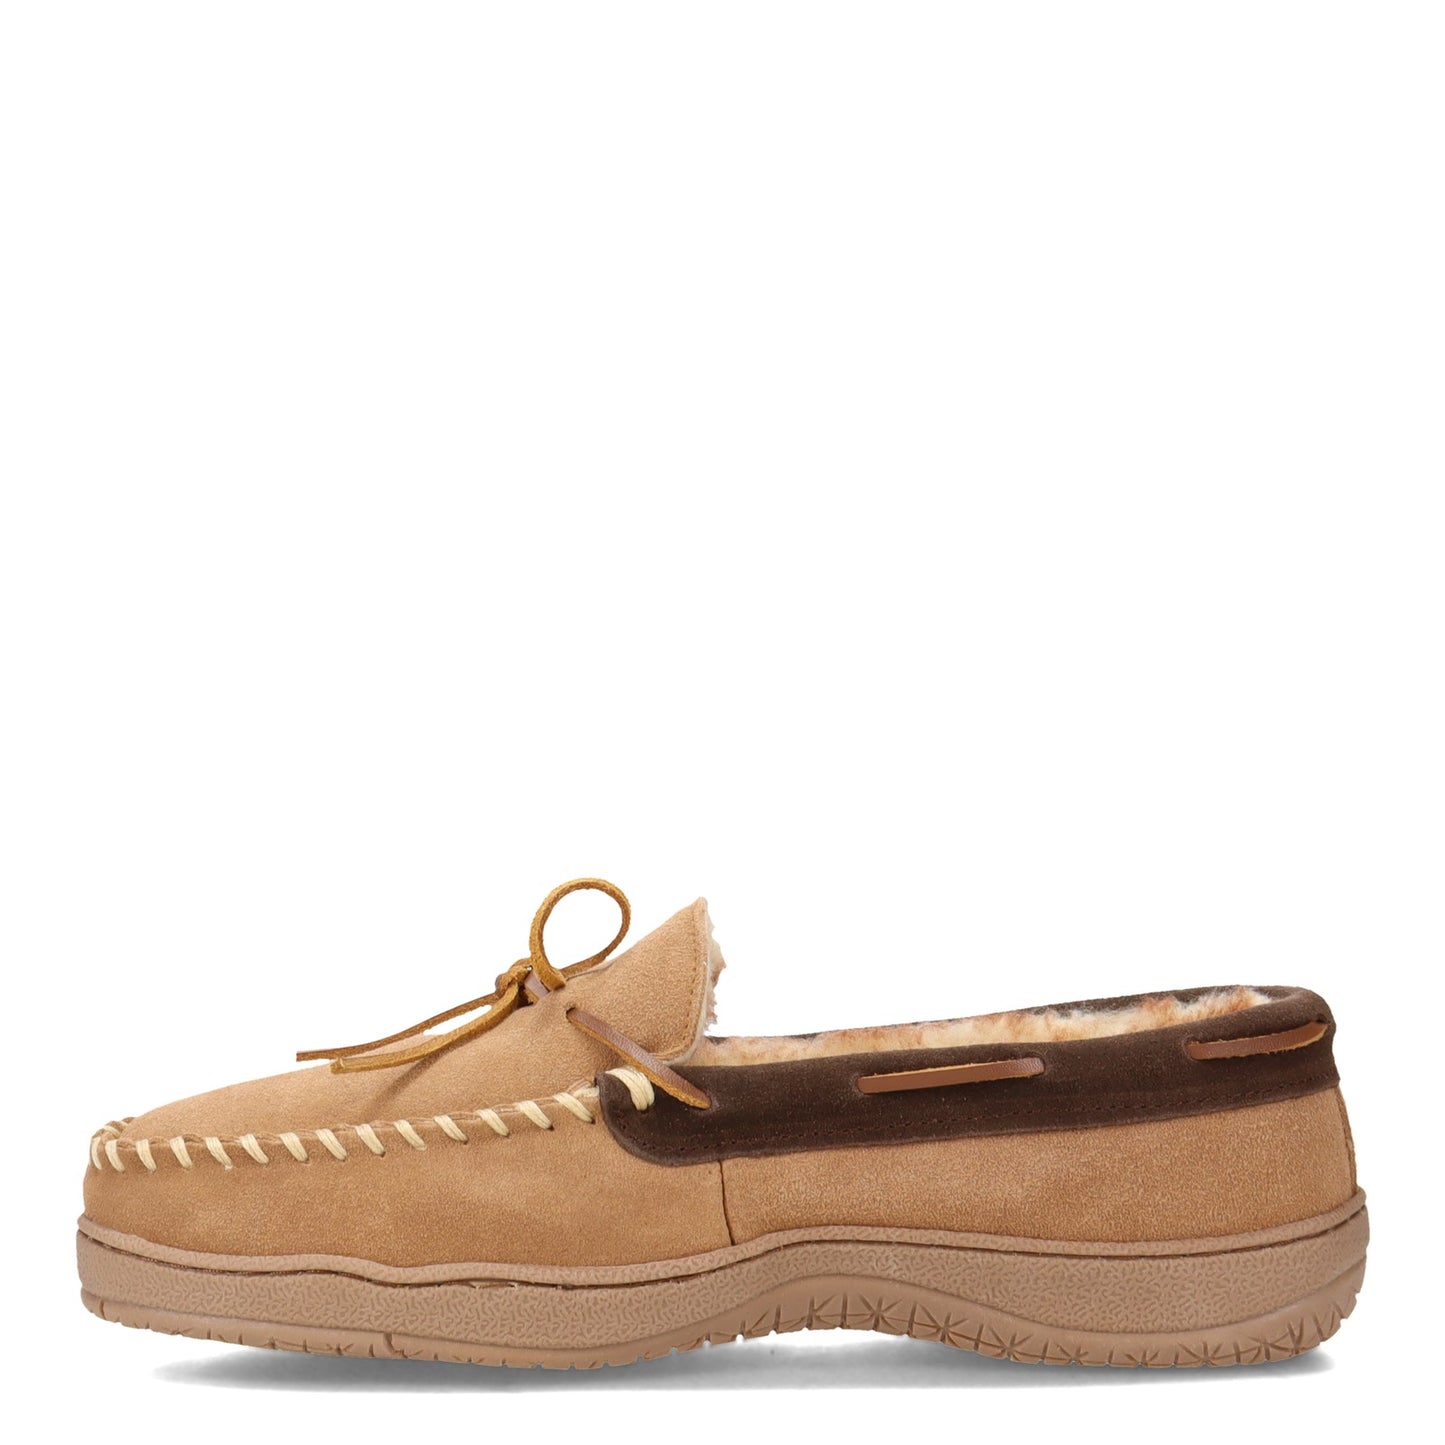 Peltz Shoes  Men's Clarks Moccasin Slipper TAN BROWN 22SH-011-SIM CB